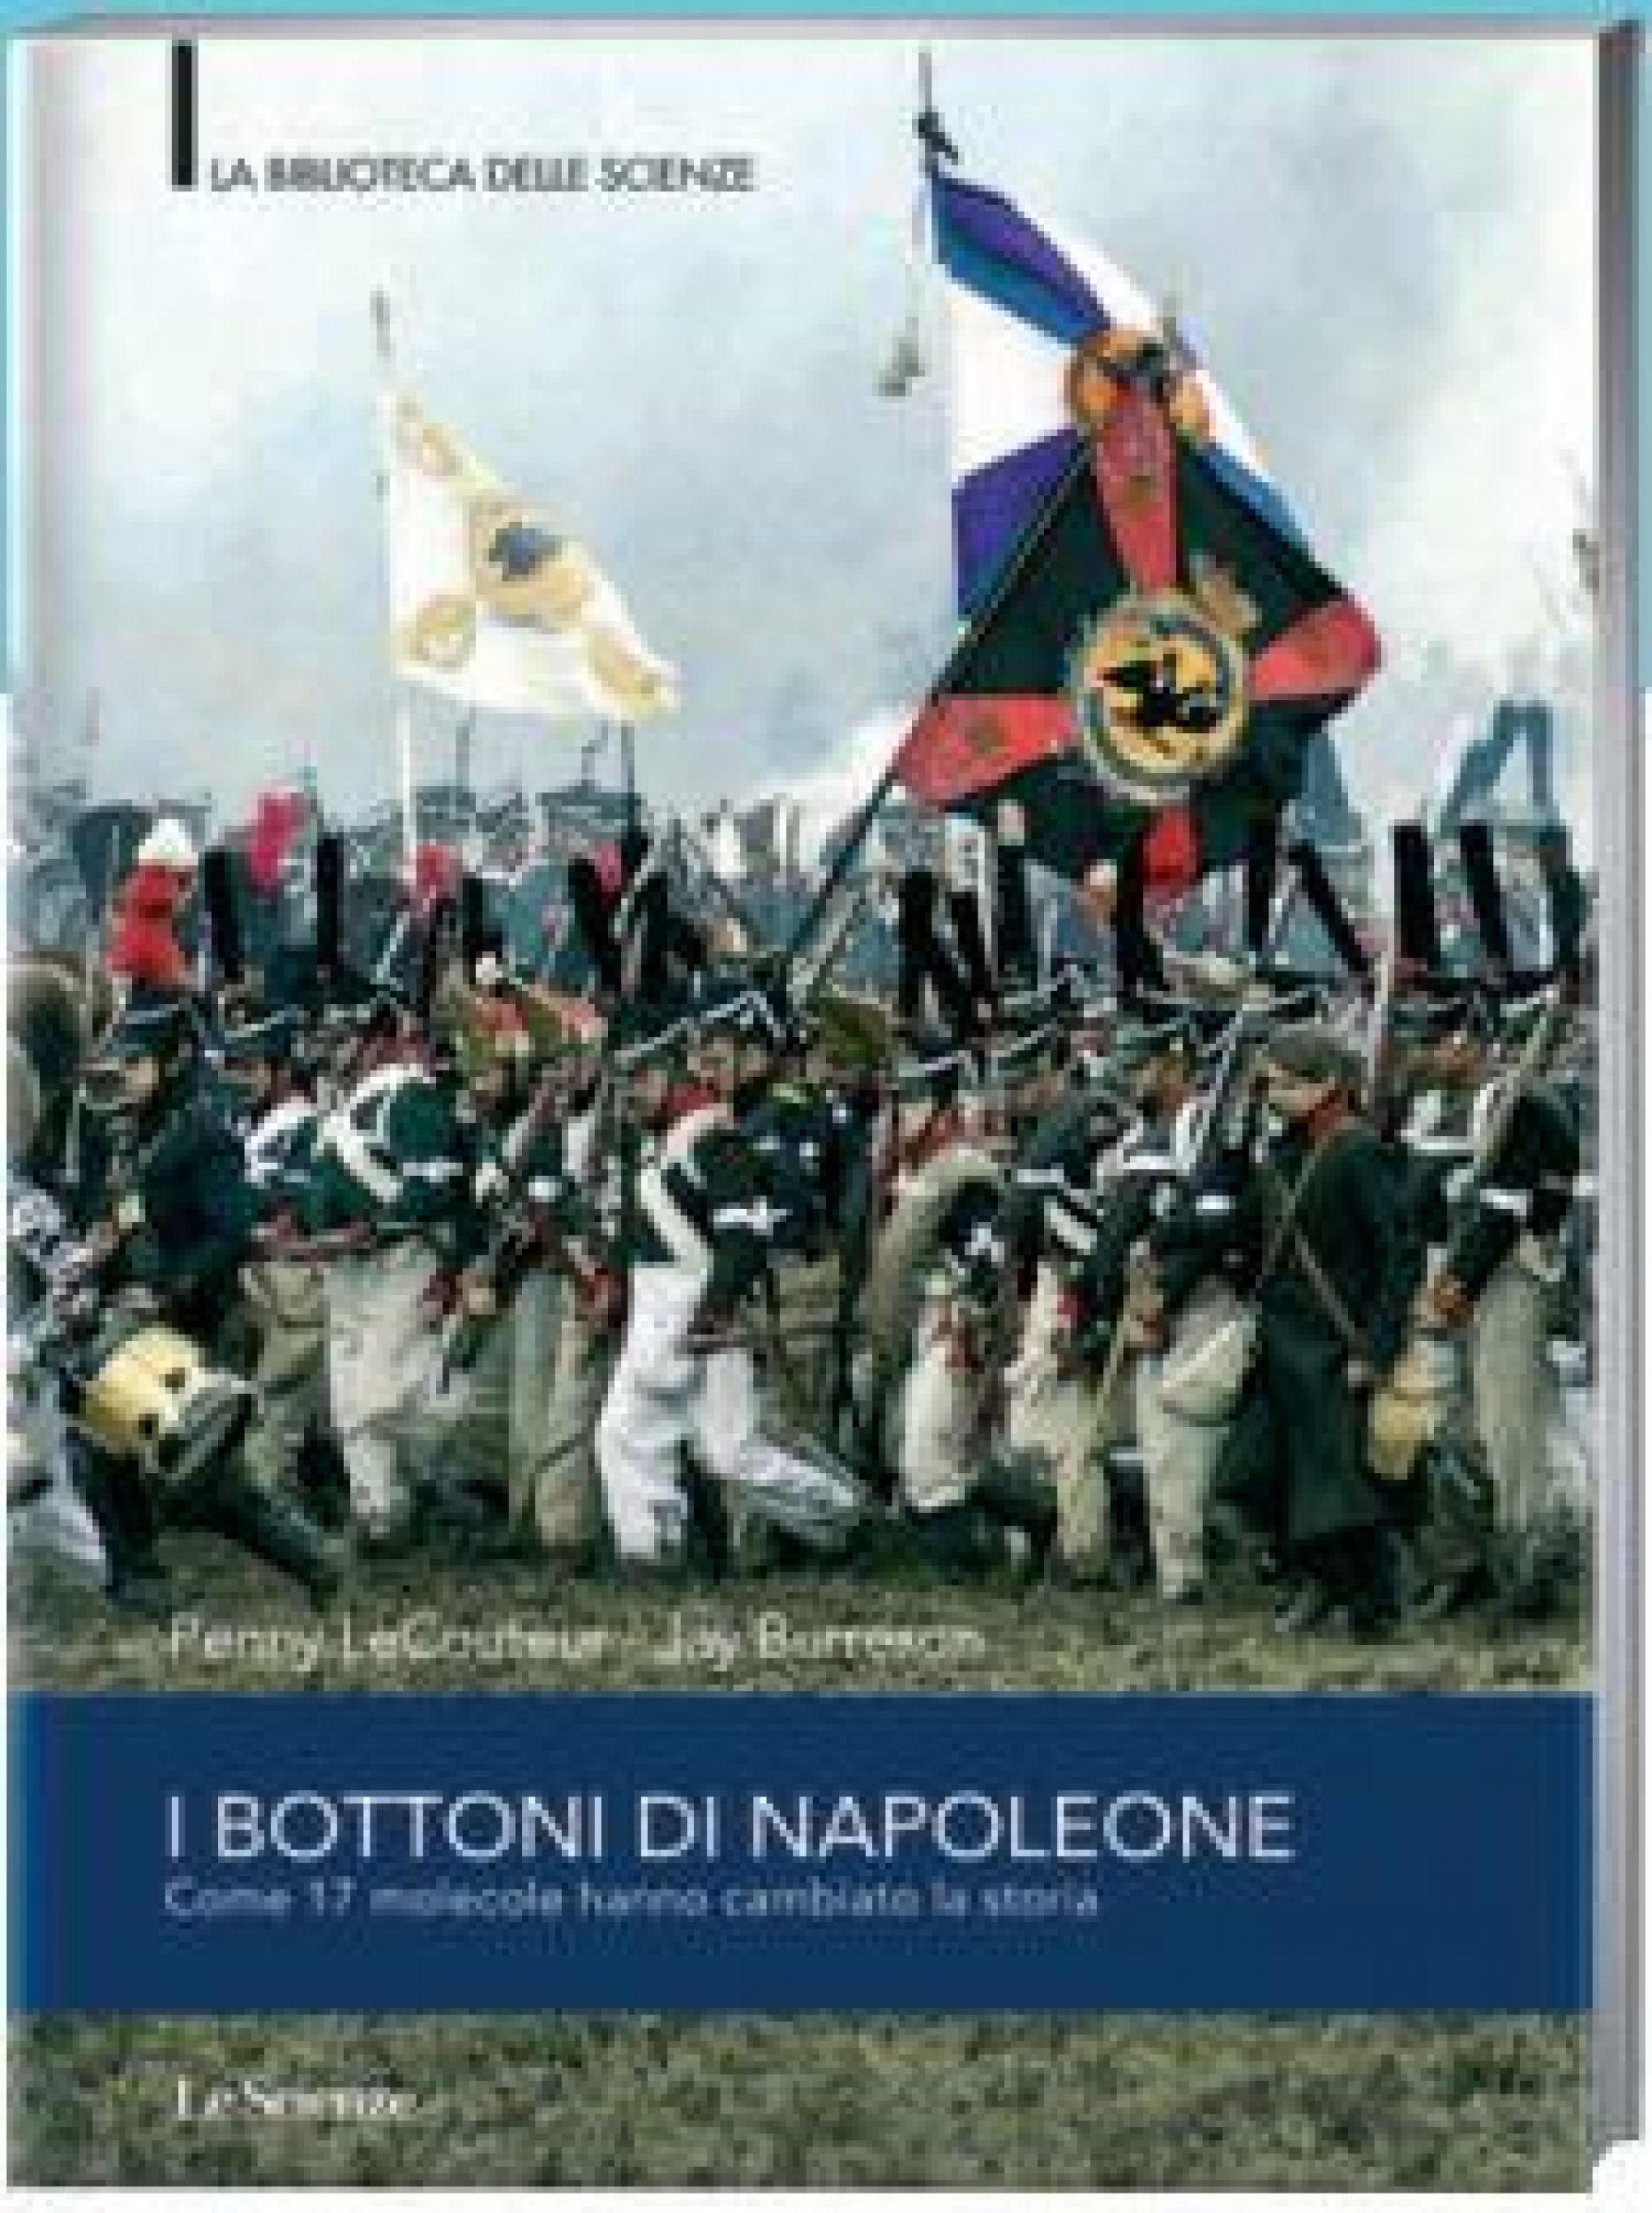 Penny LeCouteur & Jay Burreson – I Bottoni di Napoleone